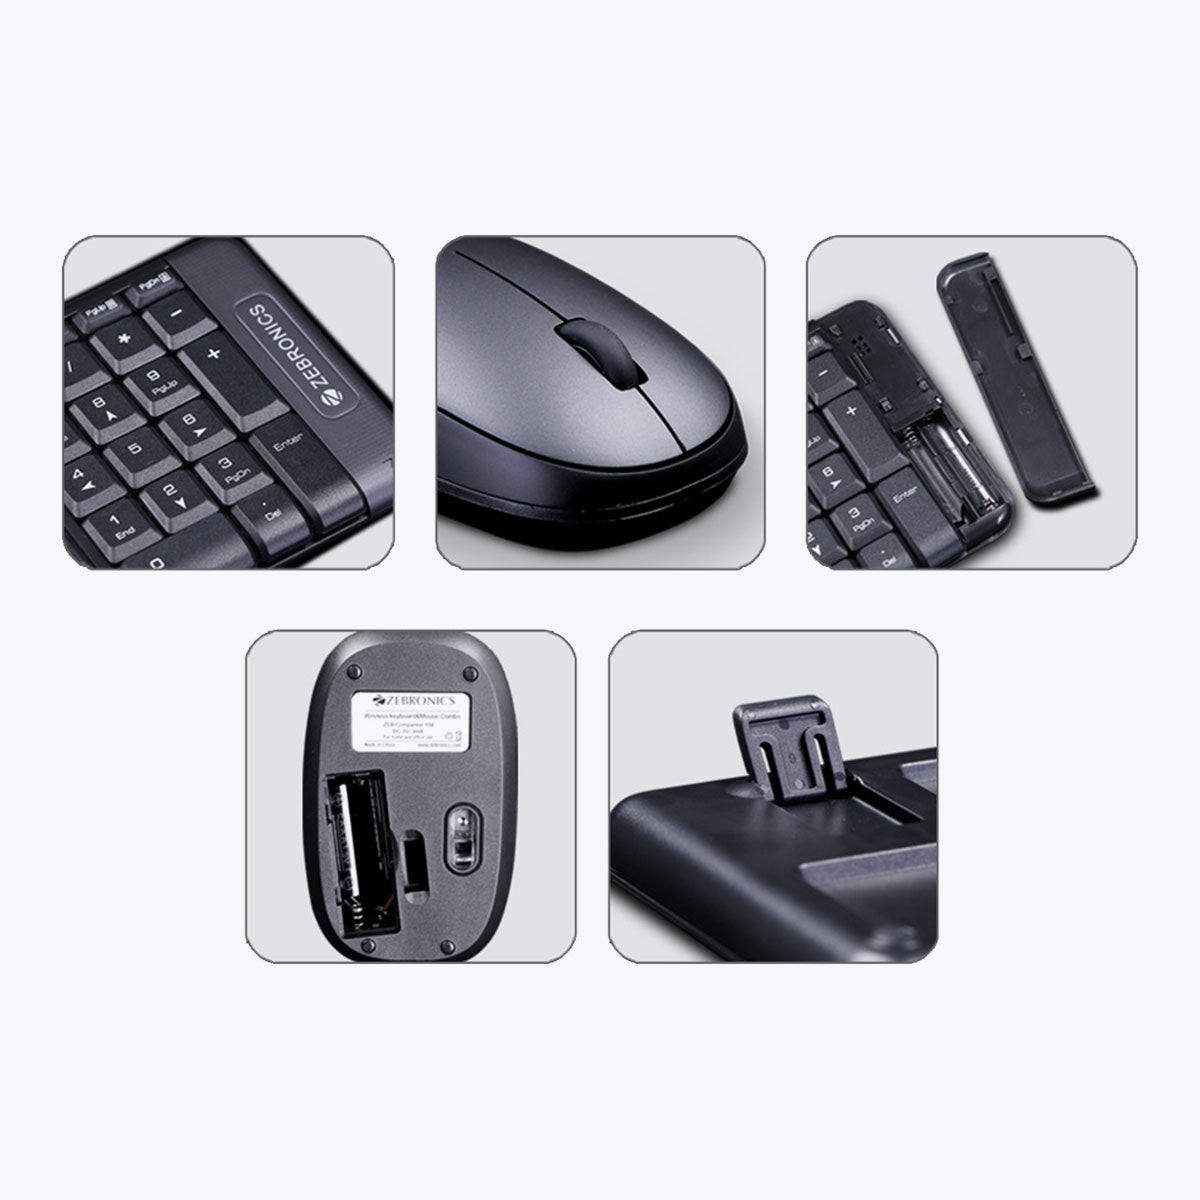 Zeb-Companion 104 - Wireless Keyboard and Mouse Combo - Zebronics